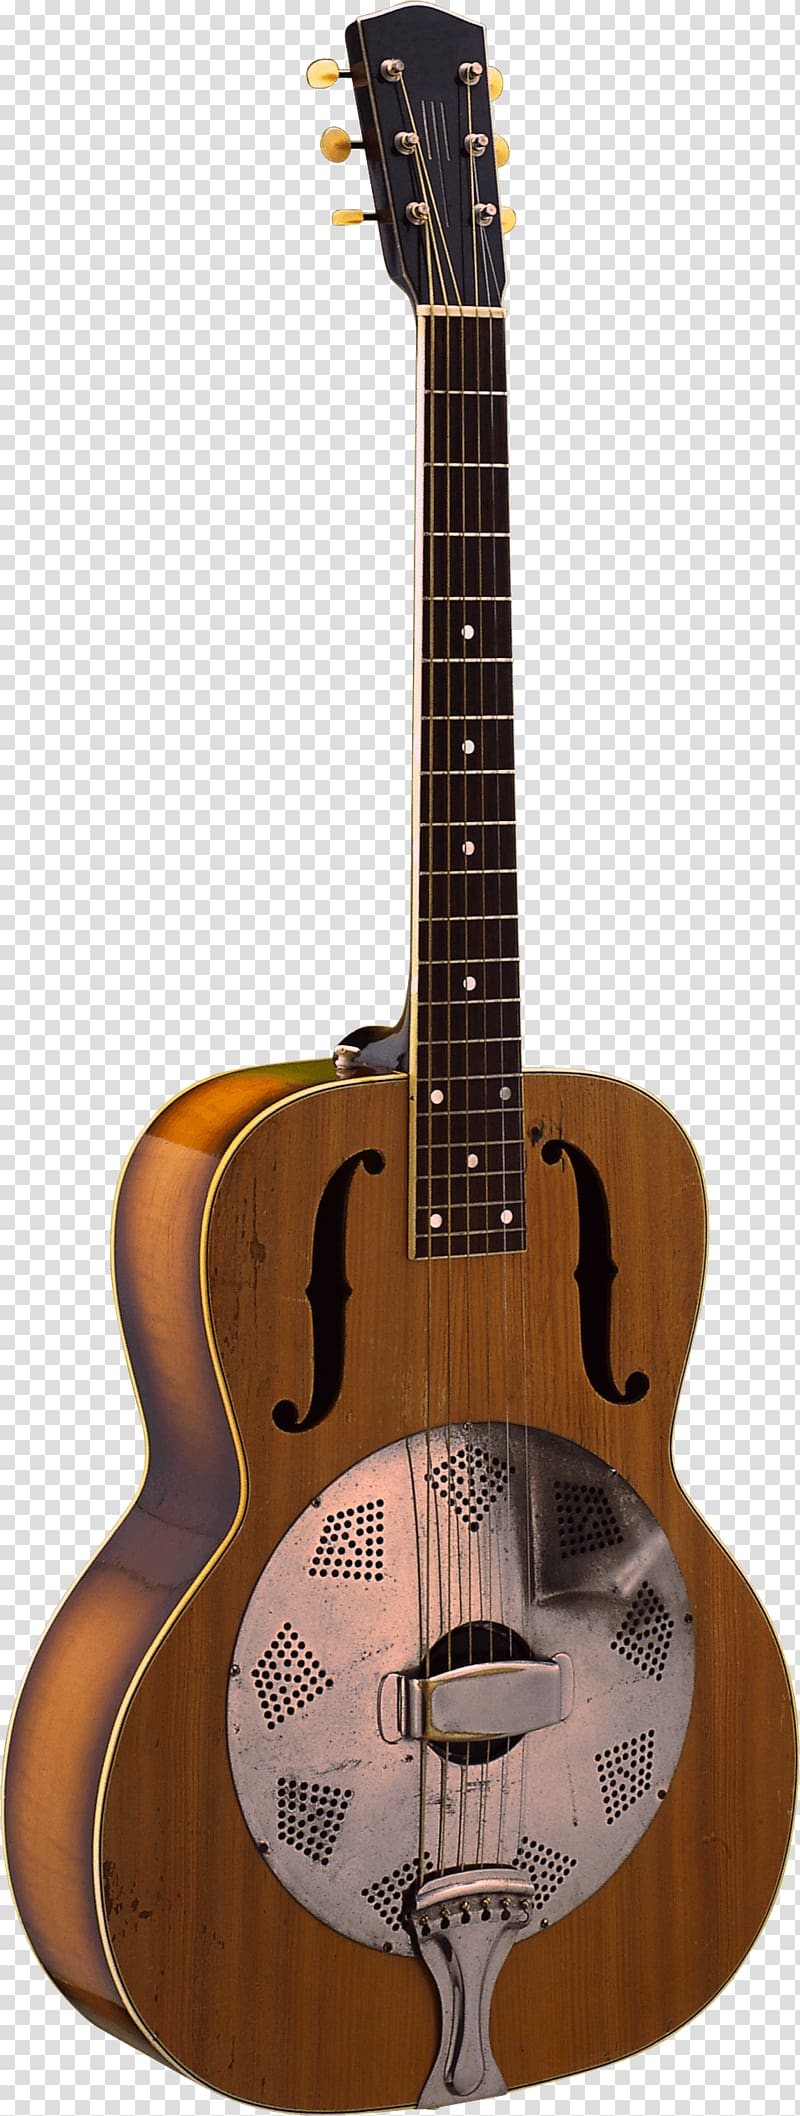 Acoustic guitar Steel guitar Classical guitar, Guitar transparent background PNG clipart